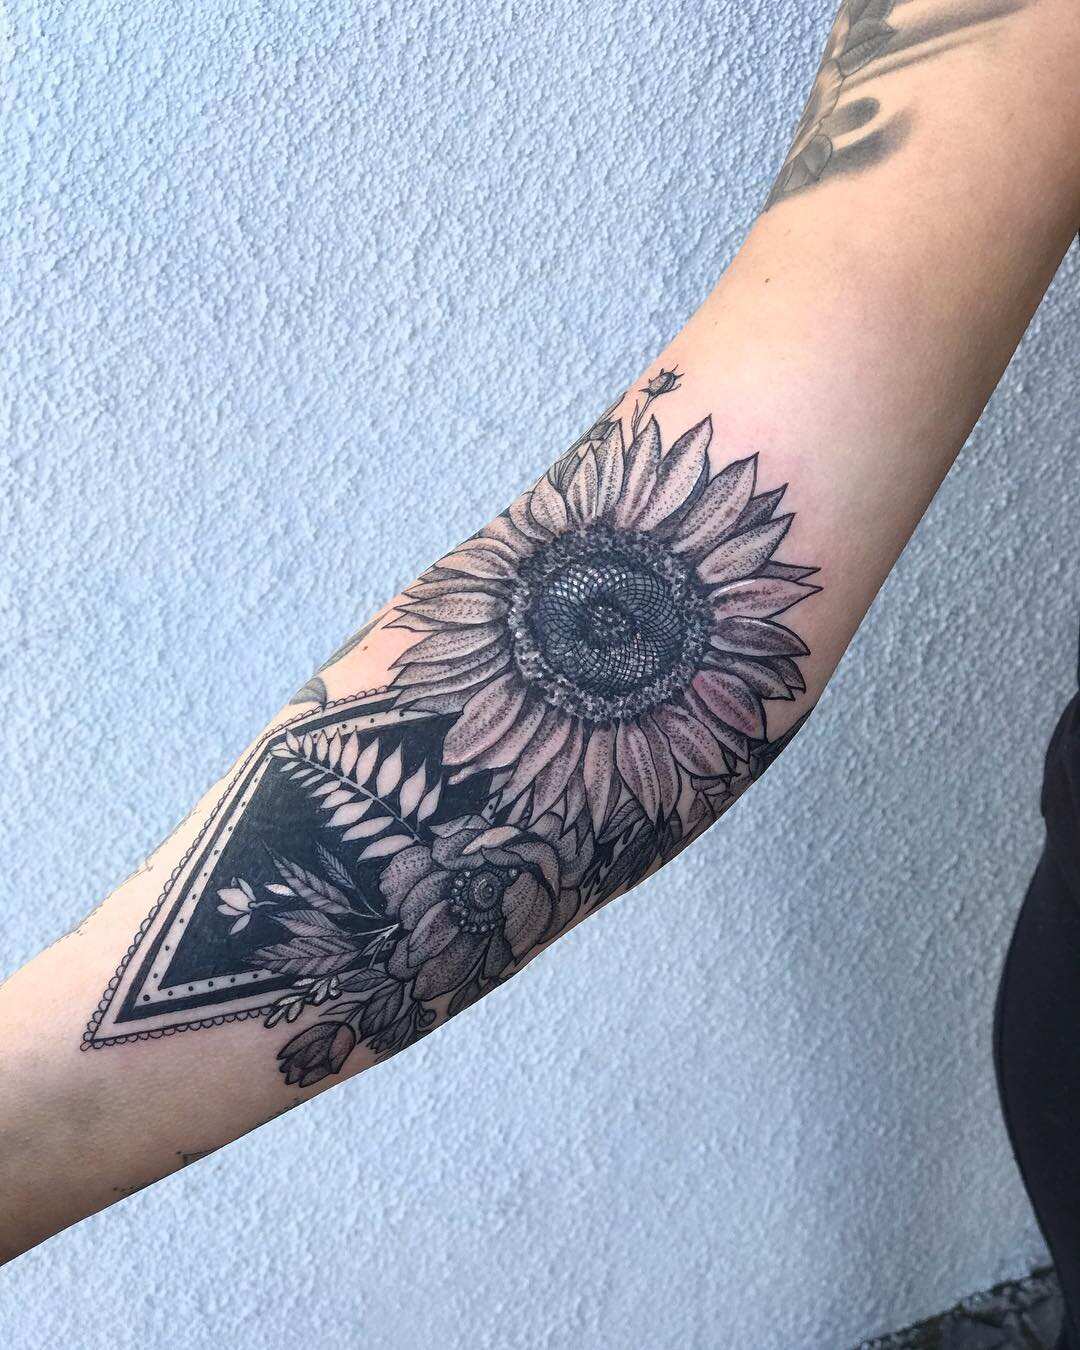 Sunflower Tattoo, Small Sunflower Tattoo, Sunflower Tattoo Ideas, Sunflower  Tattoo Designs | Sunflower tattoo shoulder, Sunflower tattoos, Sunflower  tattoo simple